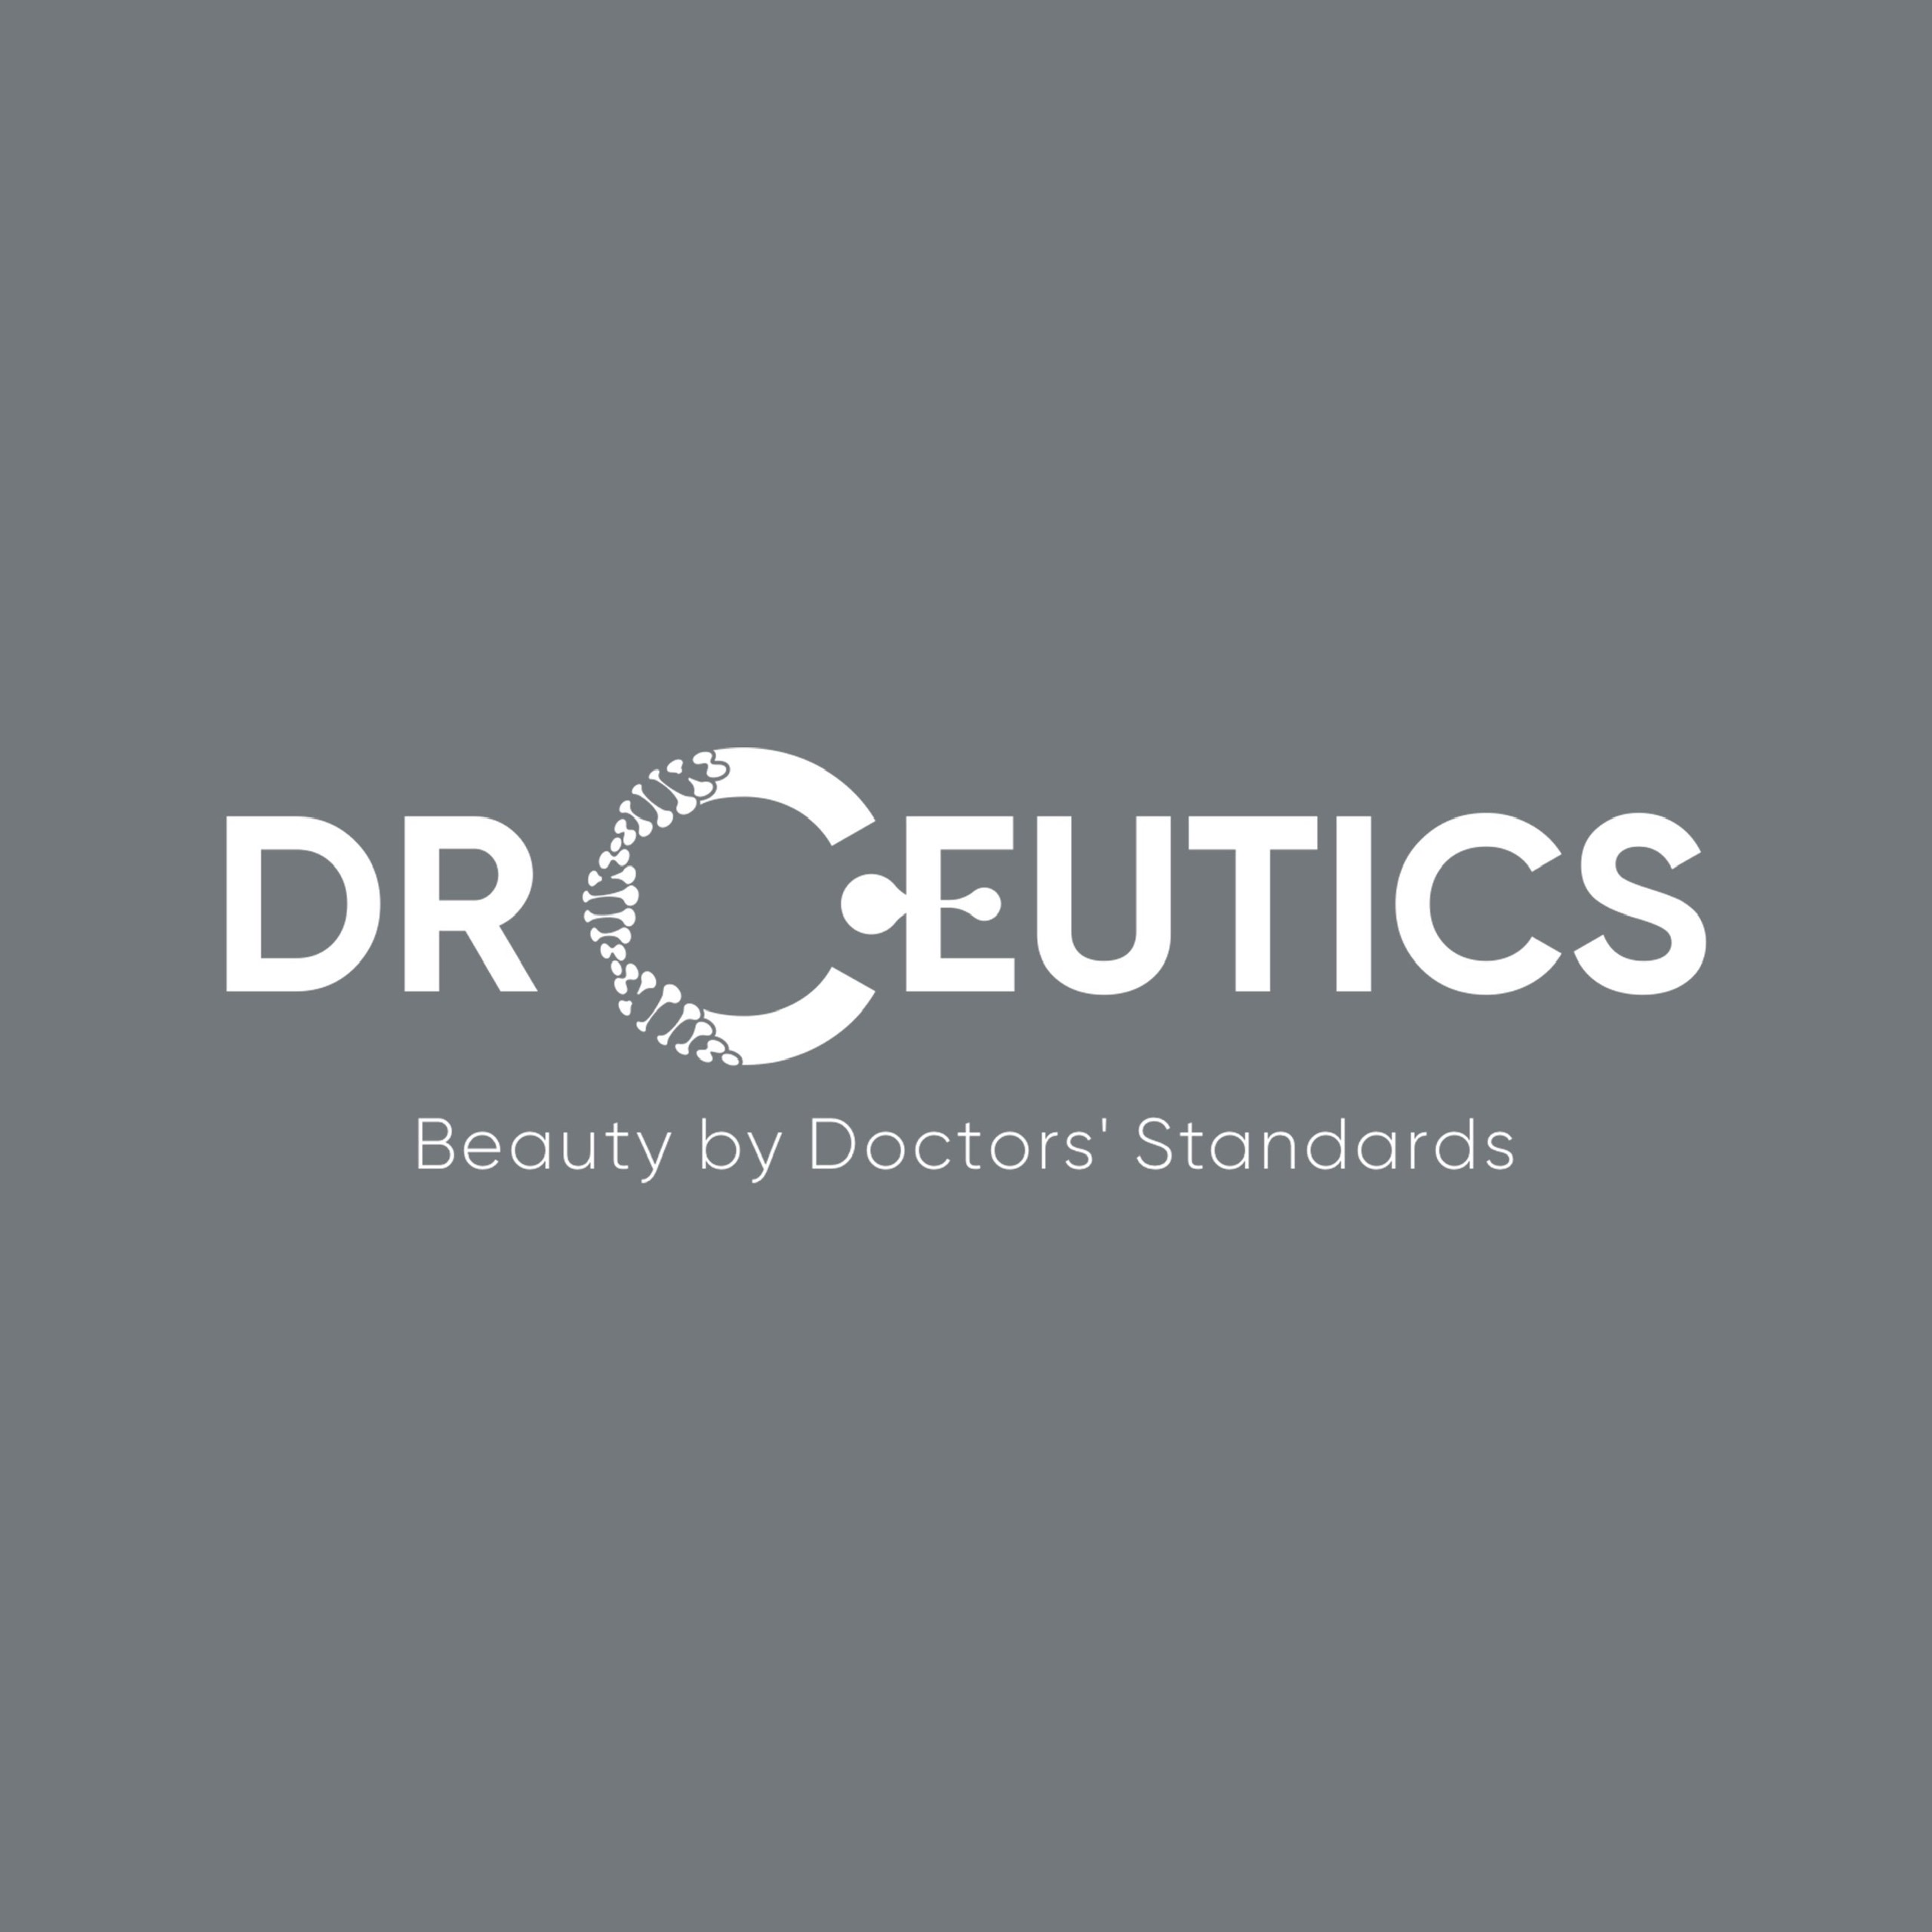 DrCeutics Official Store